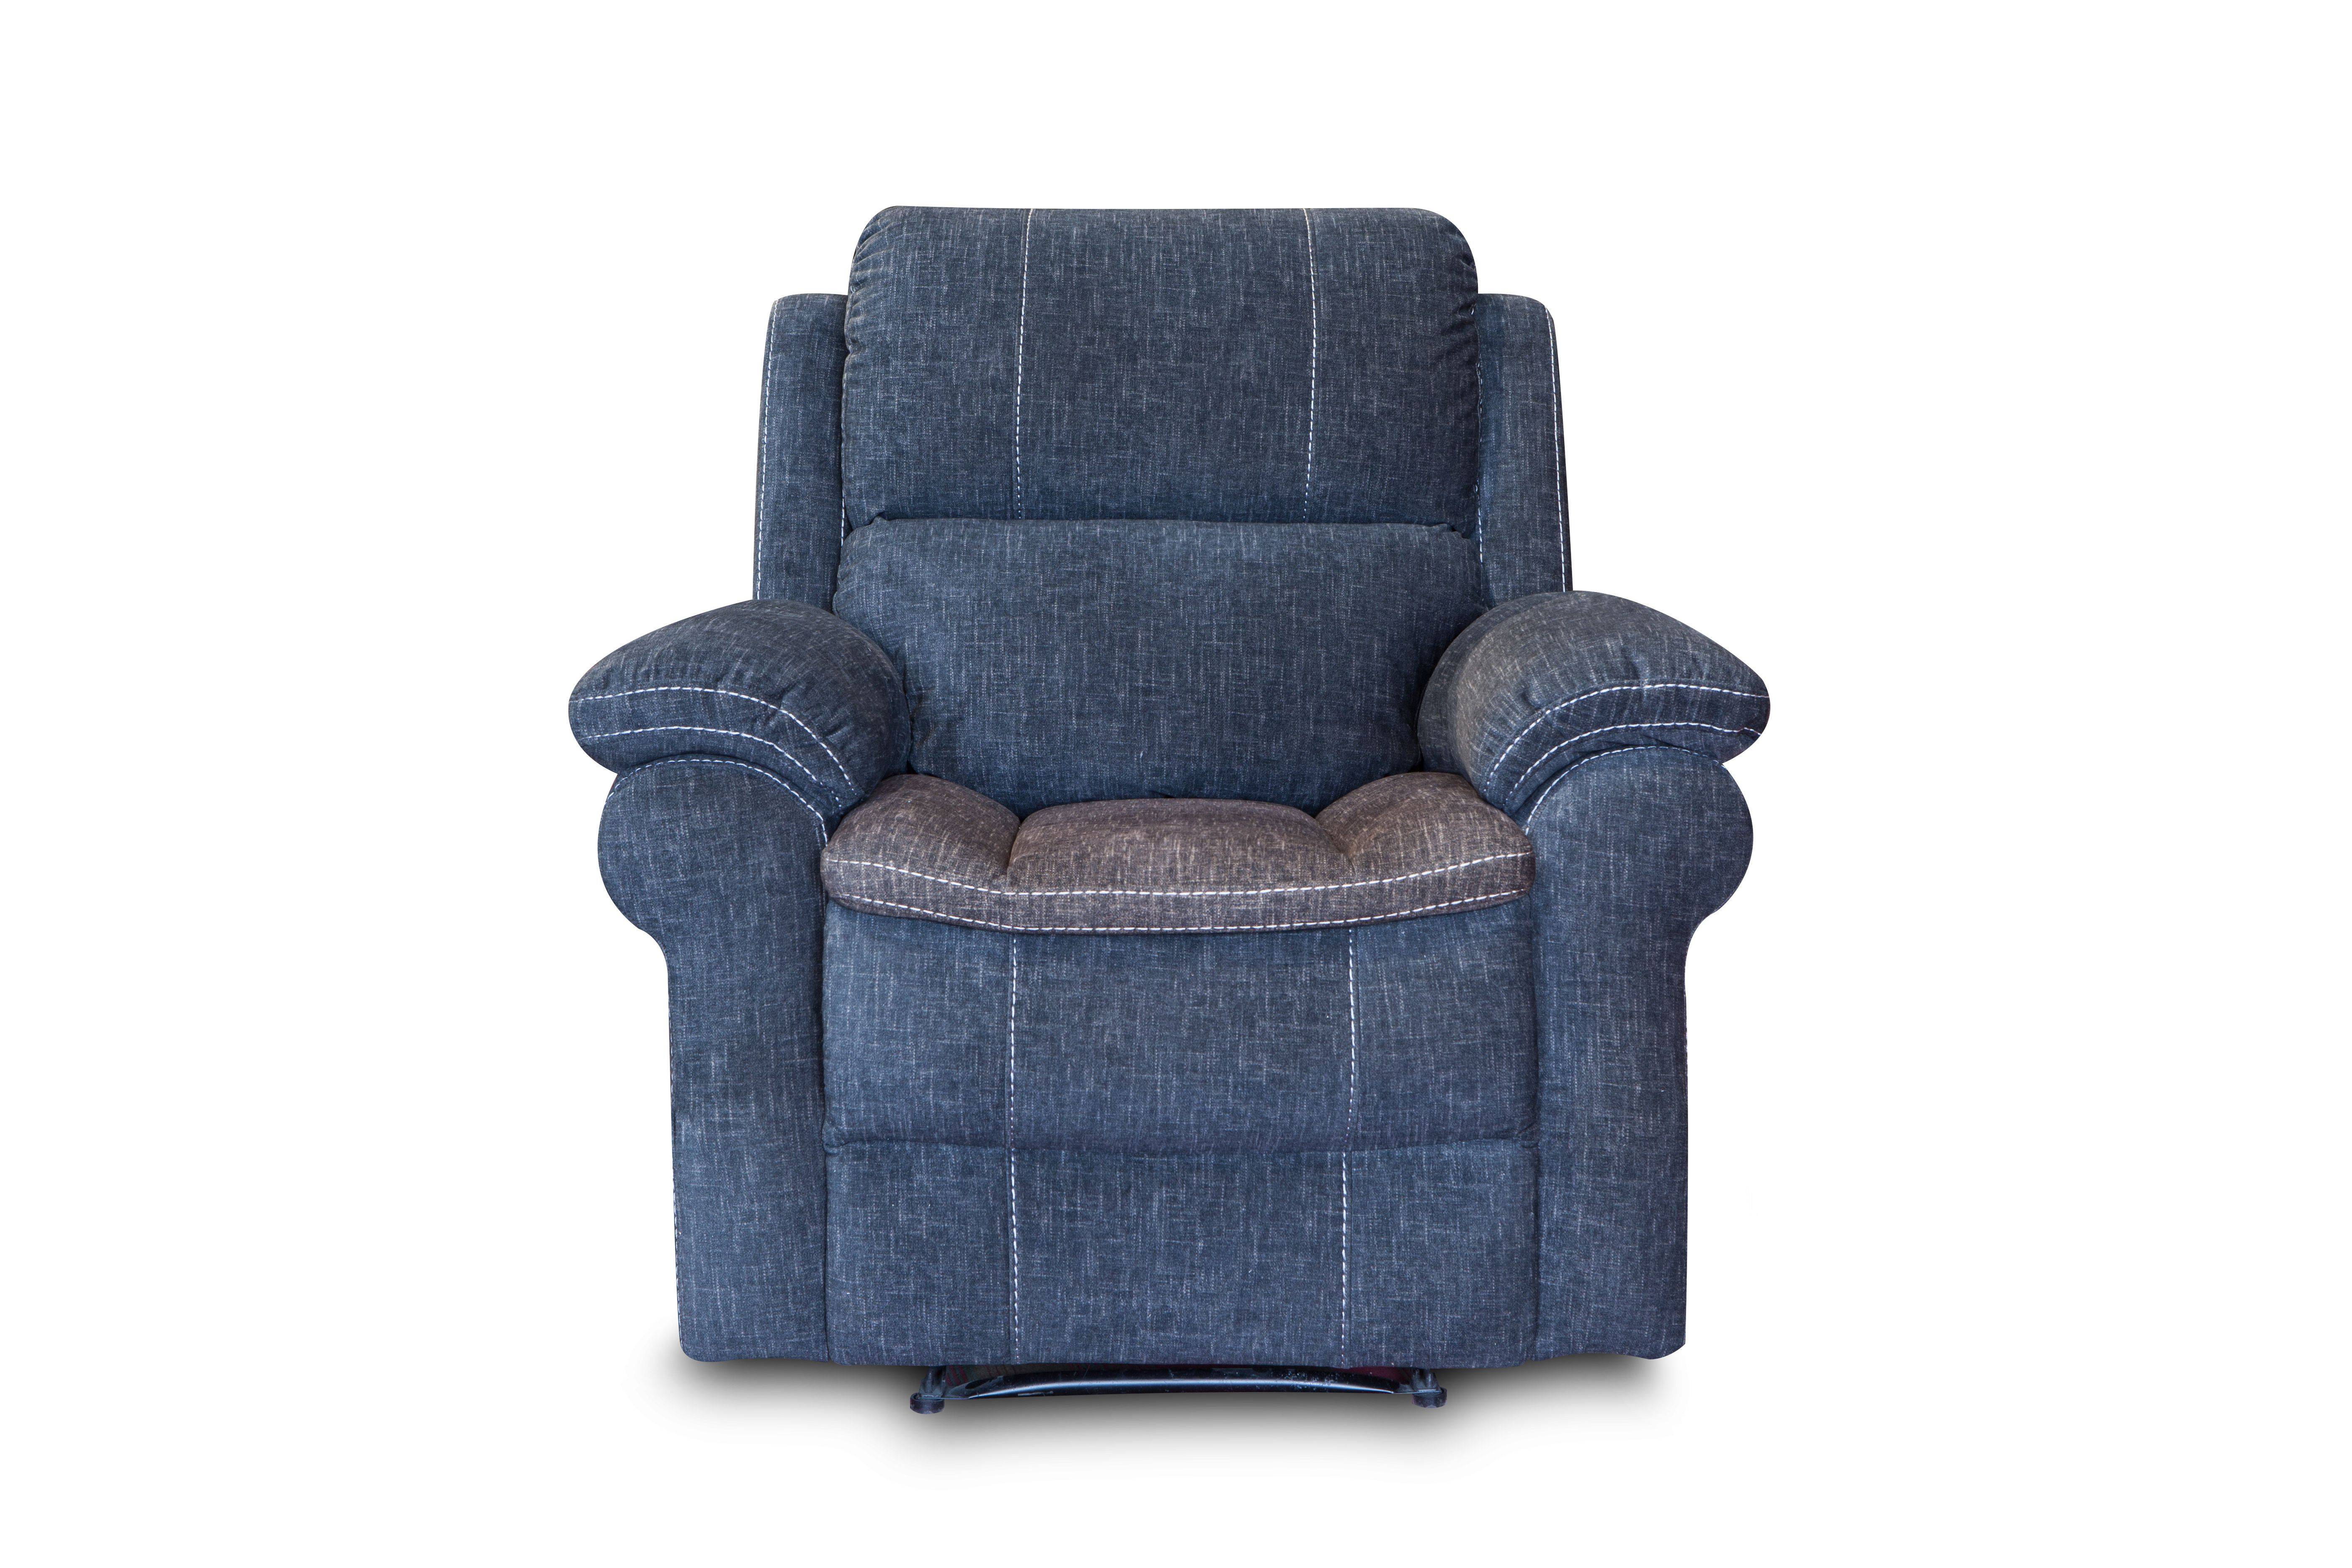 Newest best selling home furniture fabric corner modern sofa set